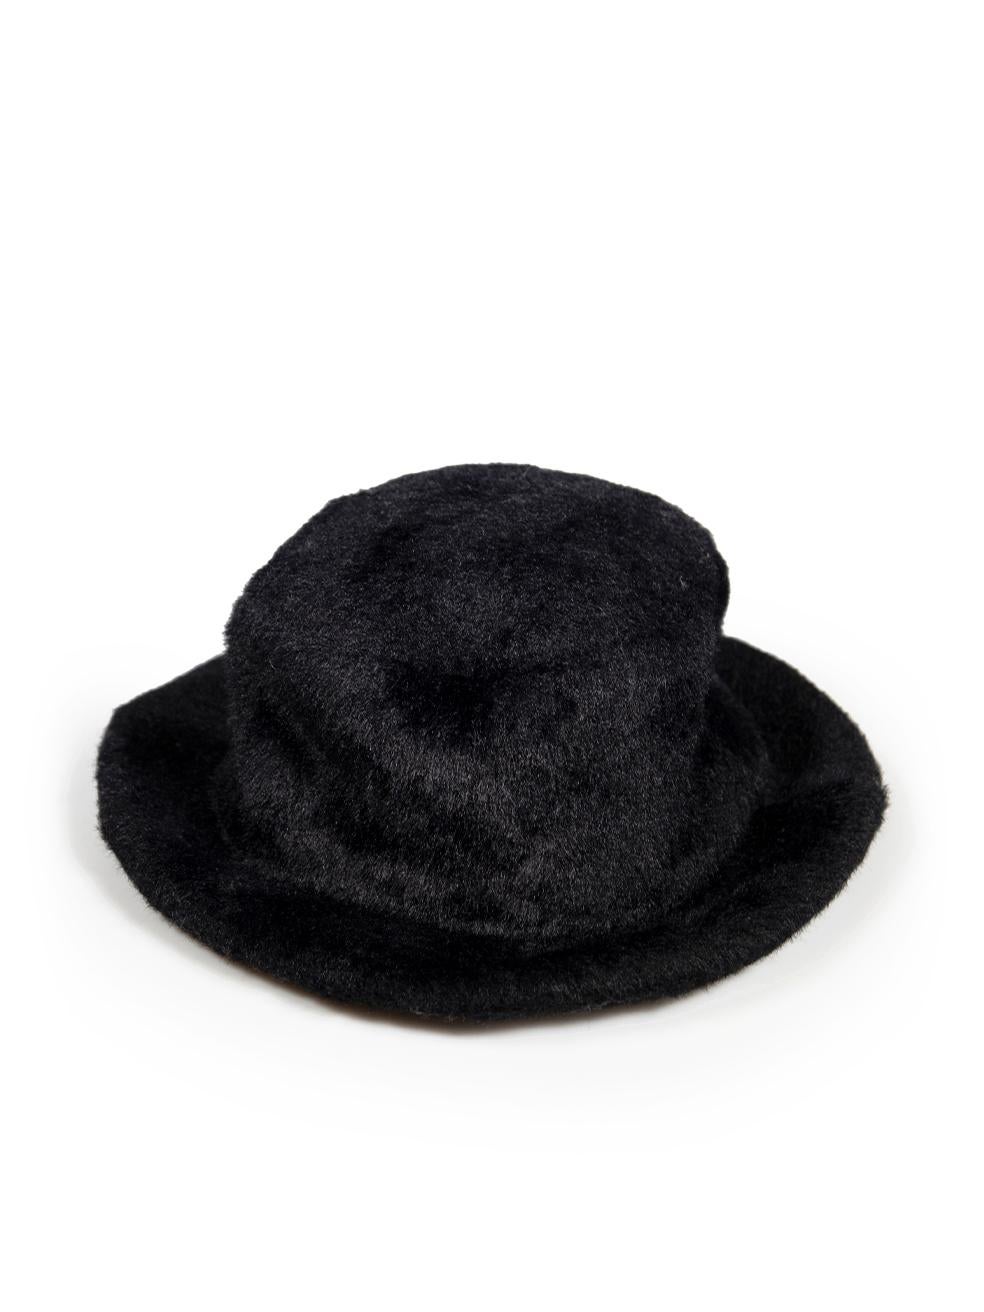 Ruslan Baginskiy Black Bucket Hat In Good Condition For Sale In London, GB